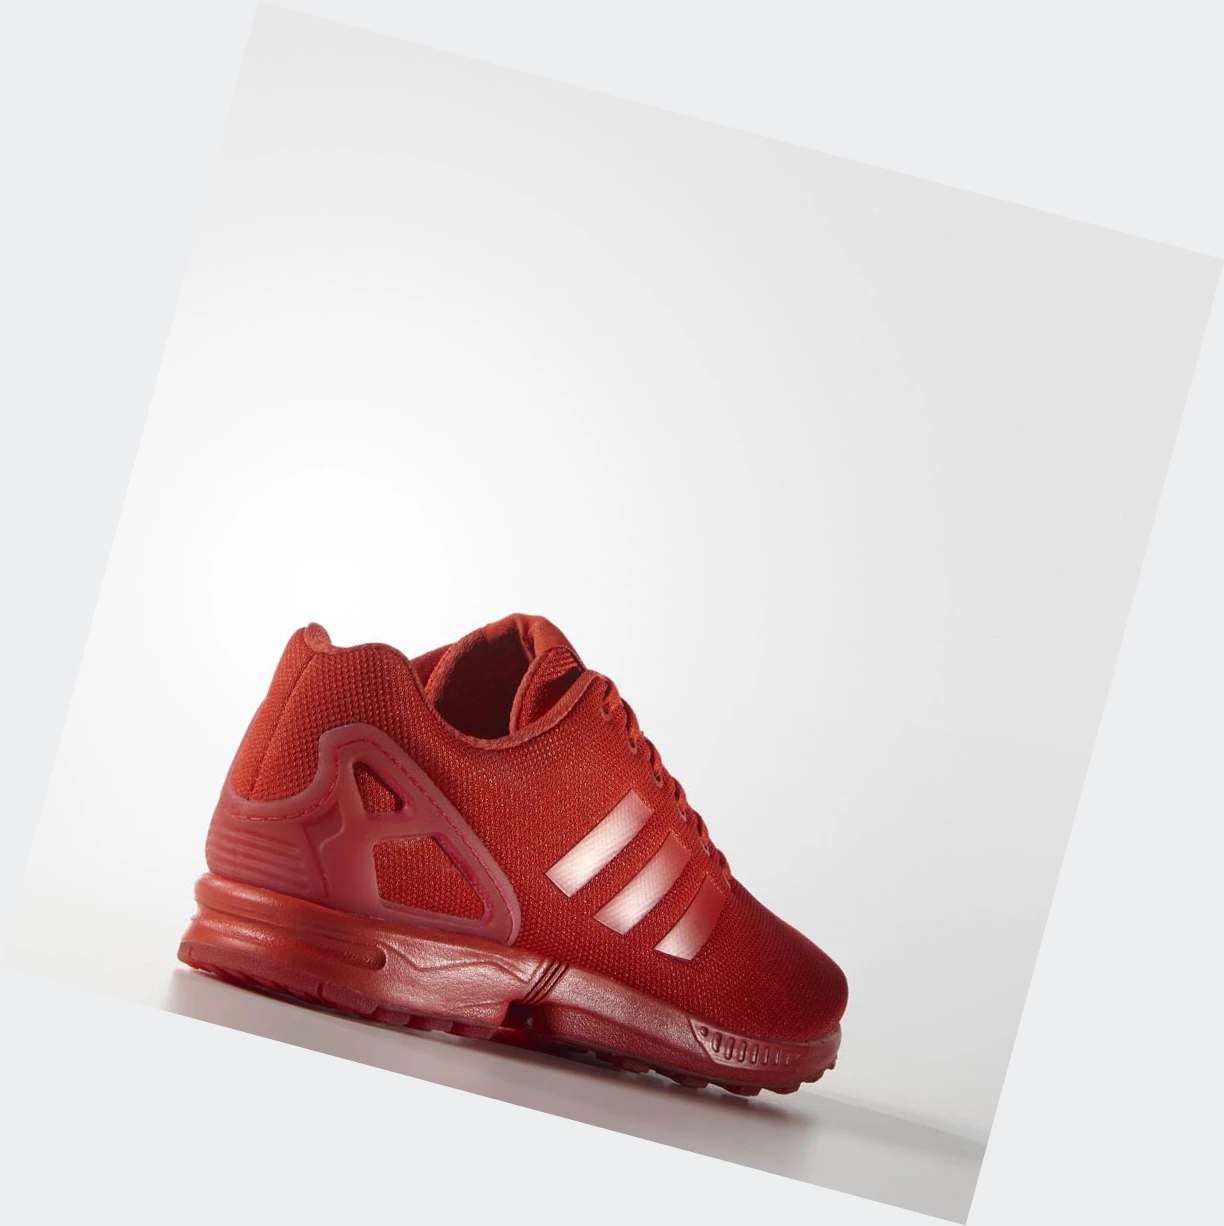 Originálne Topánky Adidas ZX Flux Panske Červené | 809SKQJAKLY